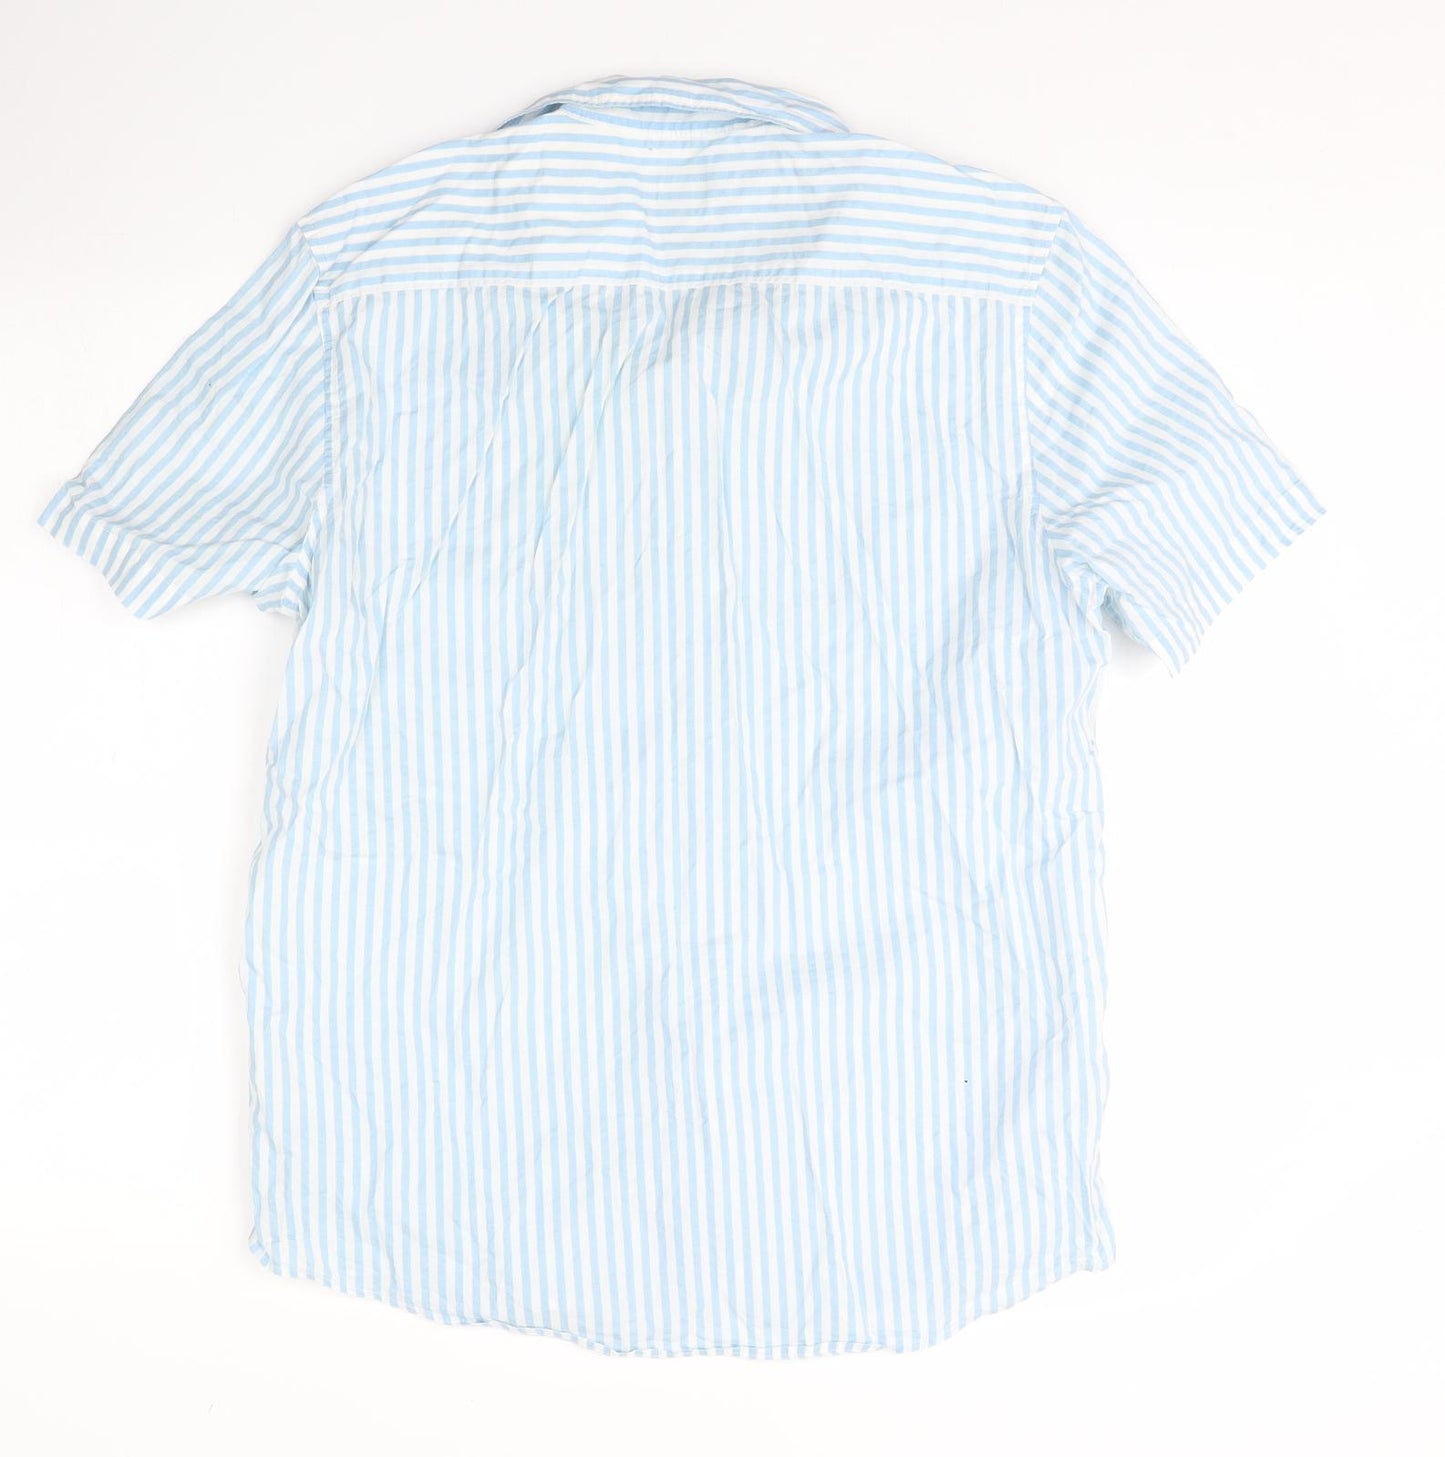 H&M  Mens Blue Striped   Dress Shirt Size M